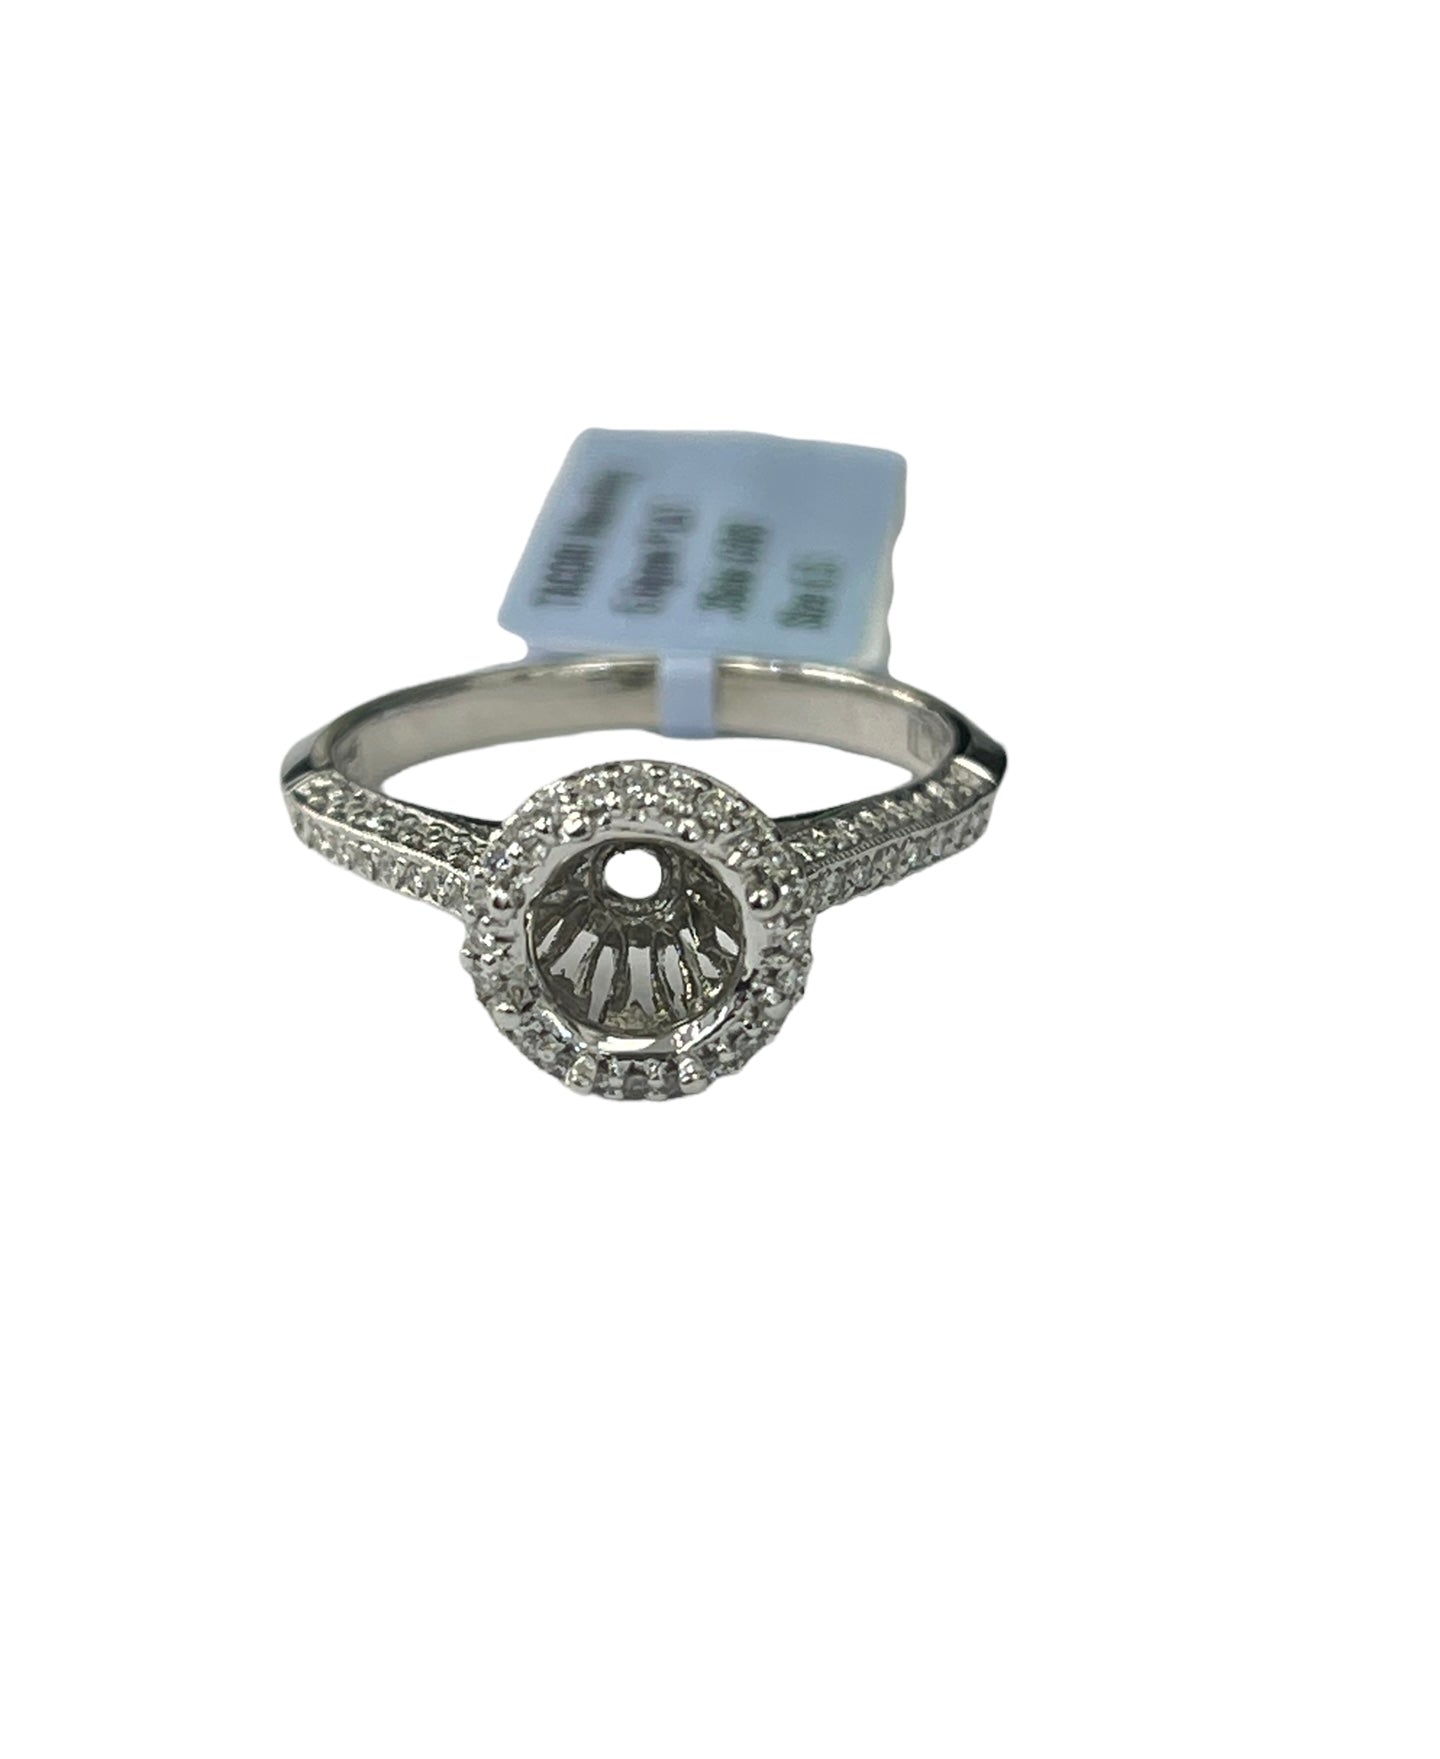 TACORI Signed 4 Prong Semi-Mounting Diamond Ring Platinum